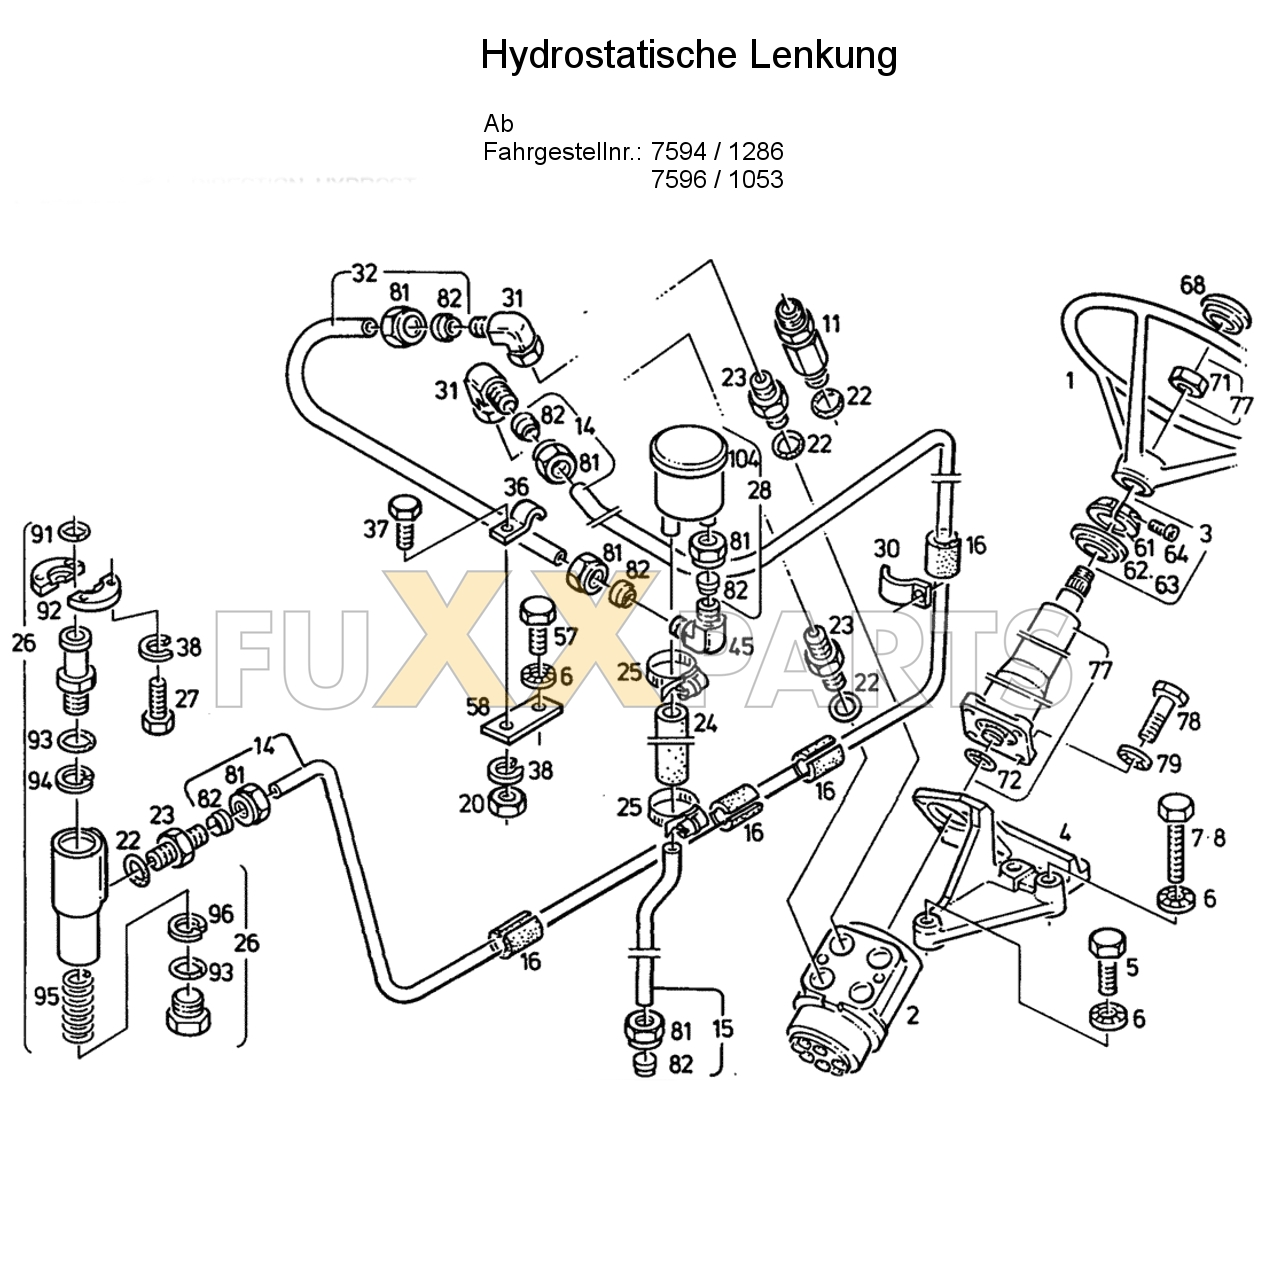 D 7807 Hydrostatische Lenkung 2.1